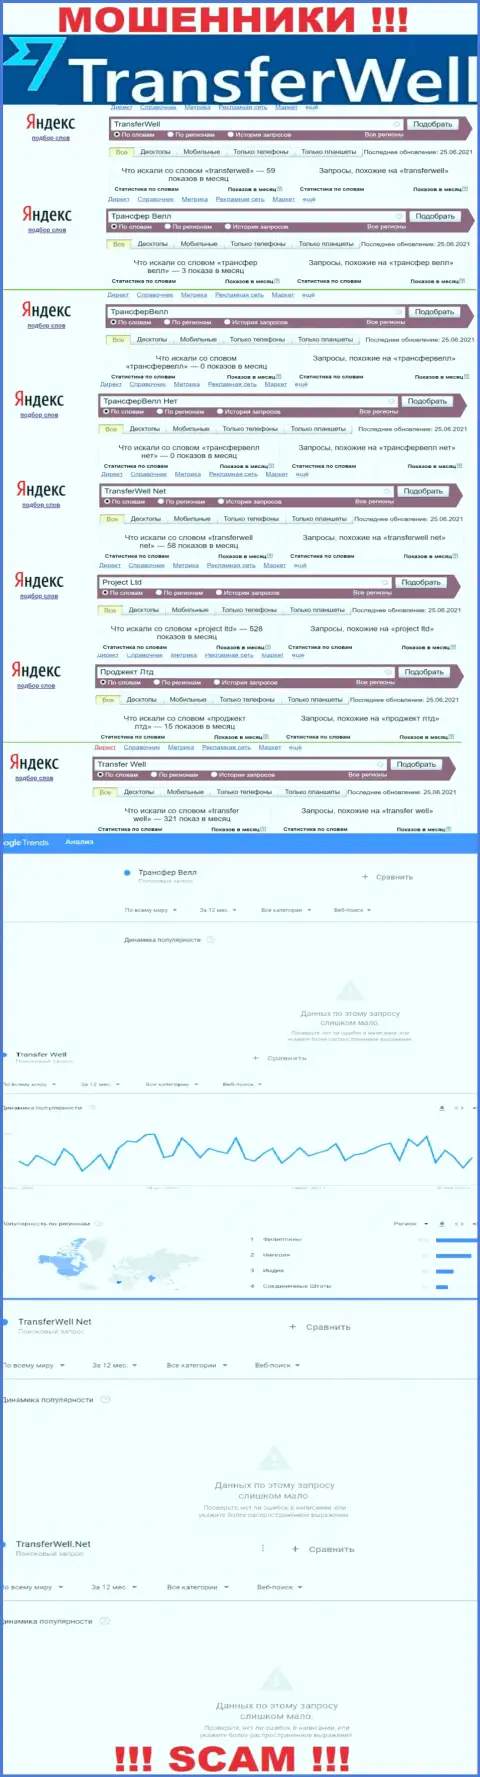 Число онлайн-запросов в поисковиках интернета по бренду махинаторов TransferWell Net